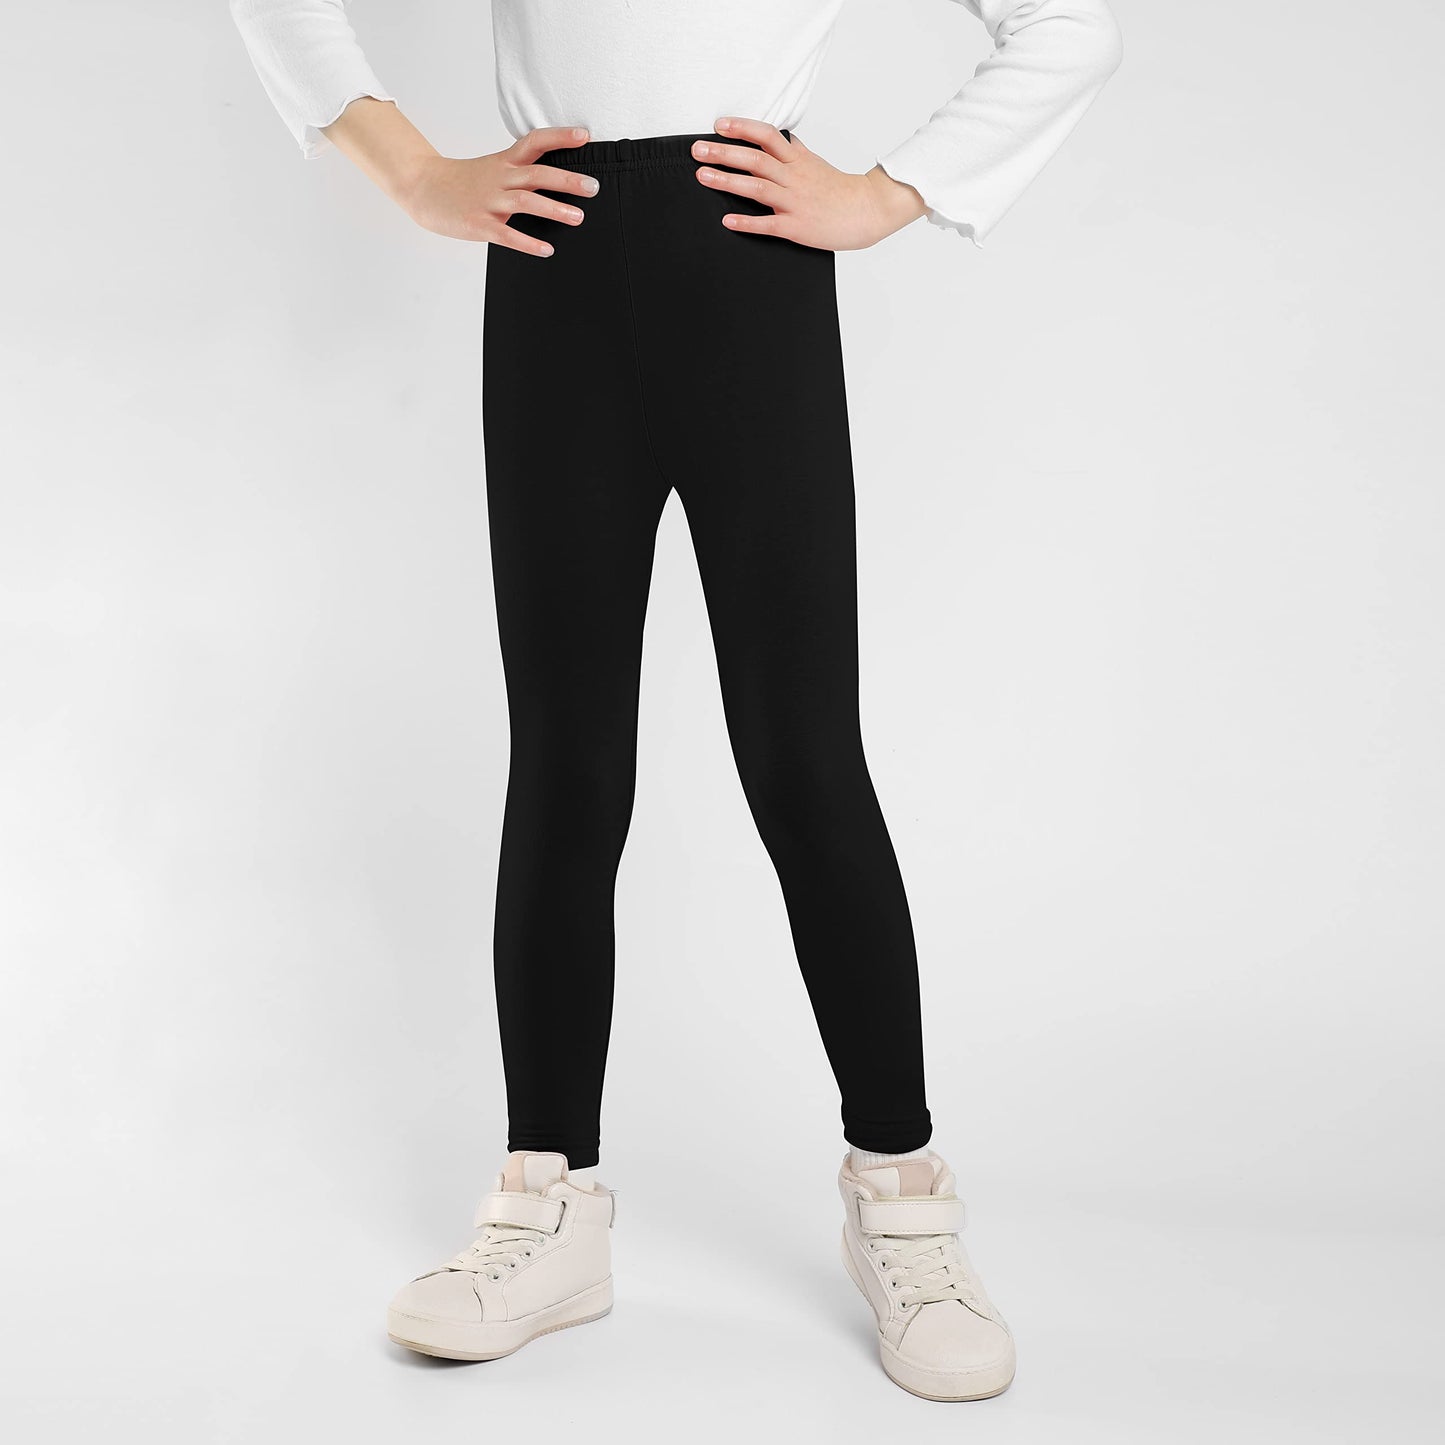 BOOPH Girls Leggings Classic Printed Kids Stretchy Pants 3-4 years